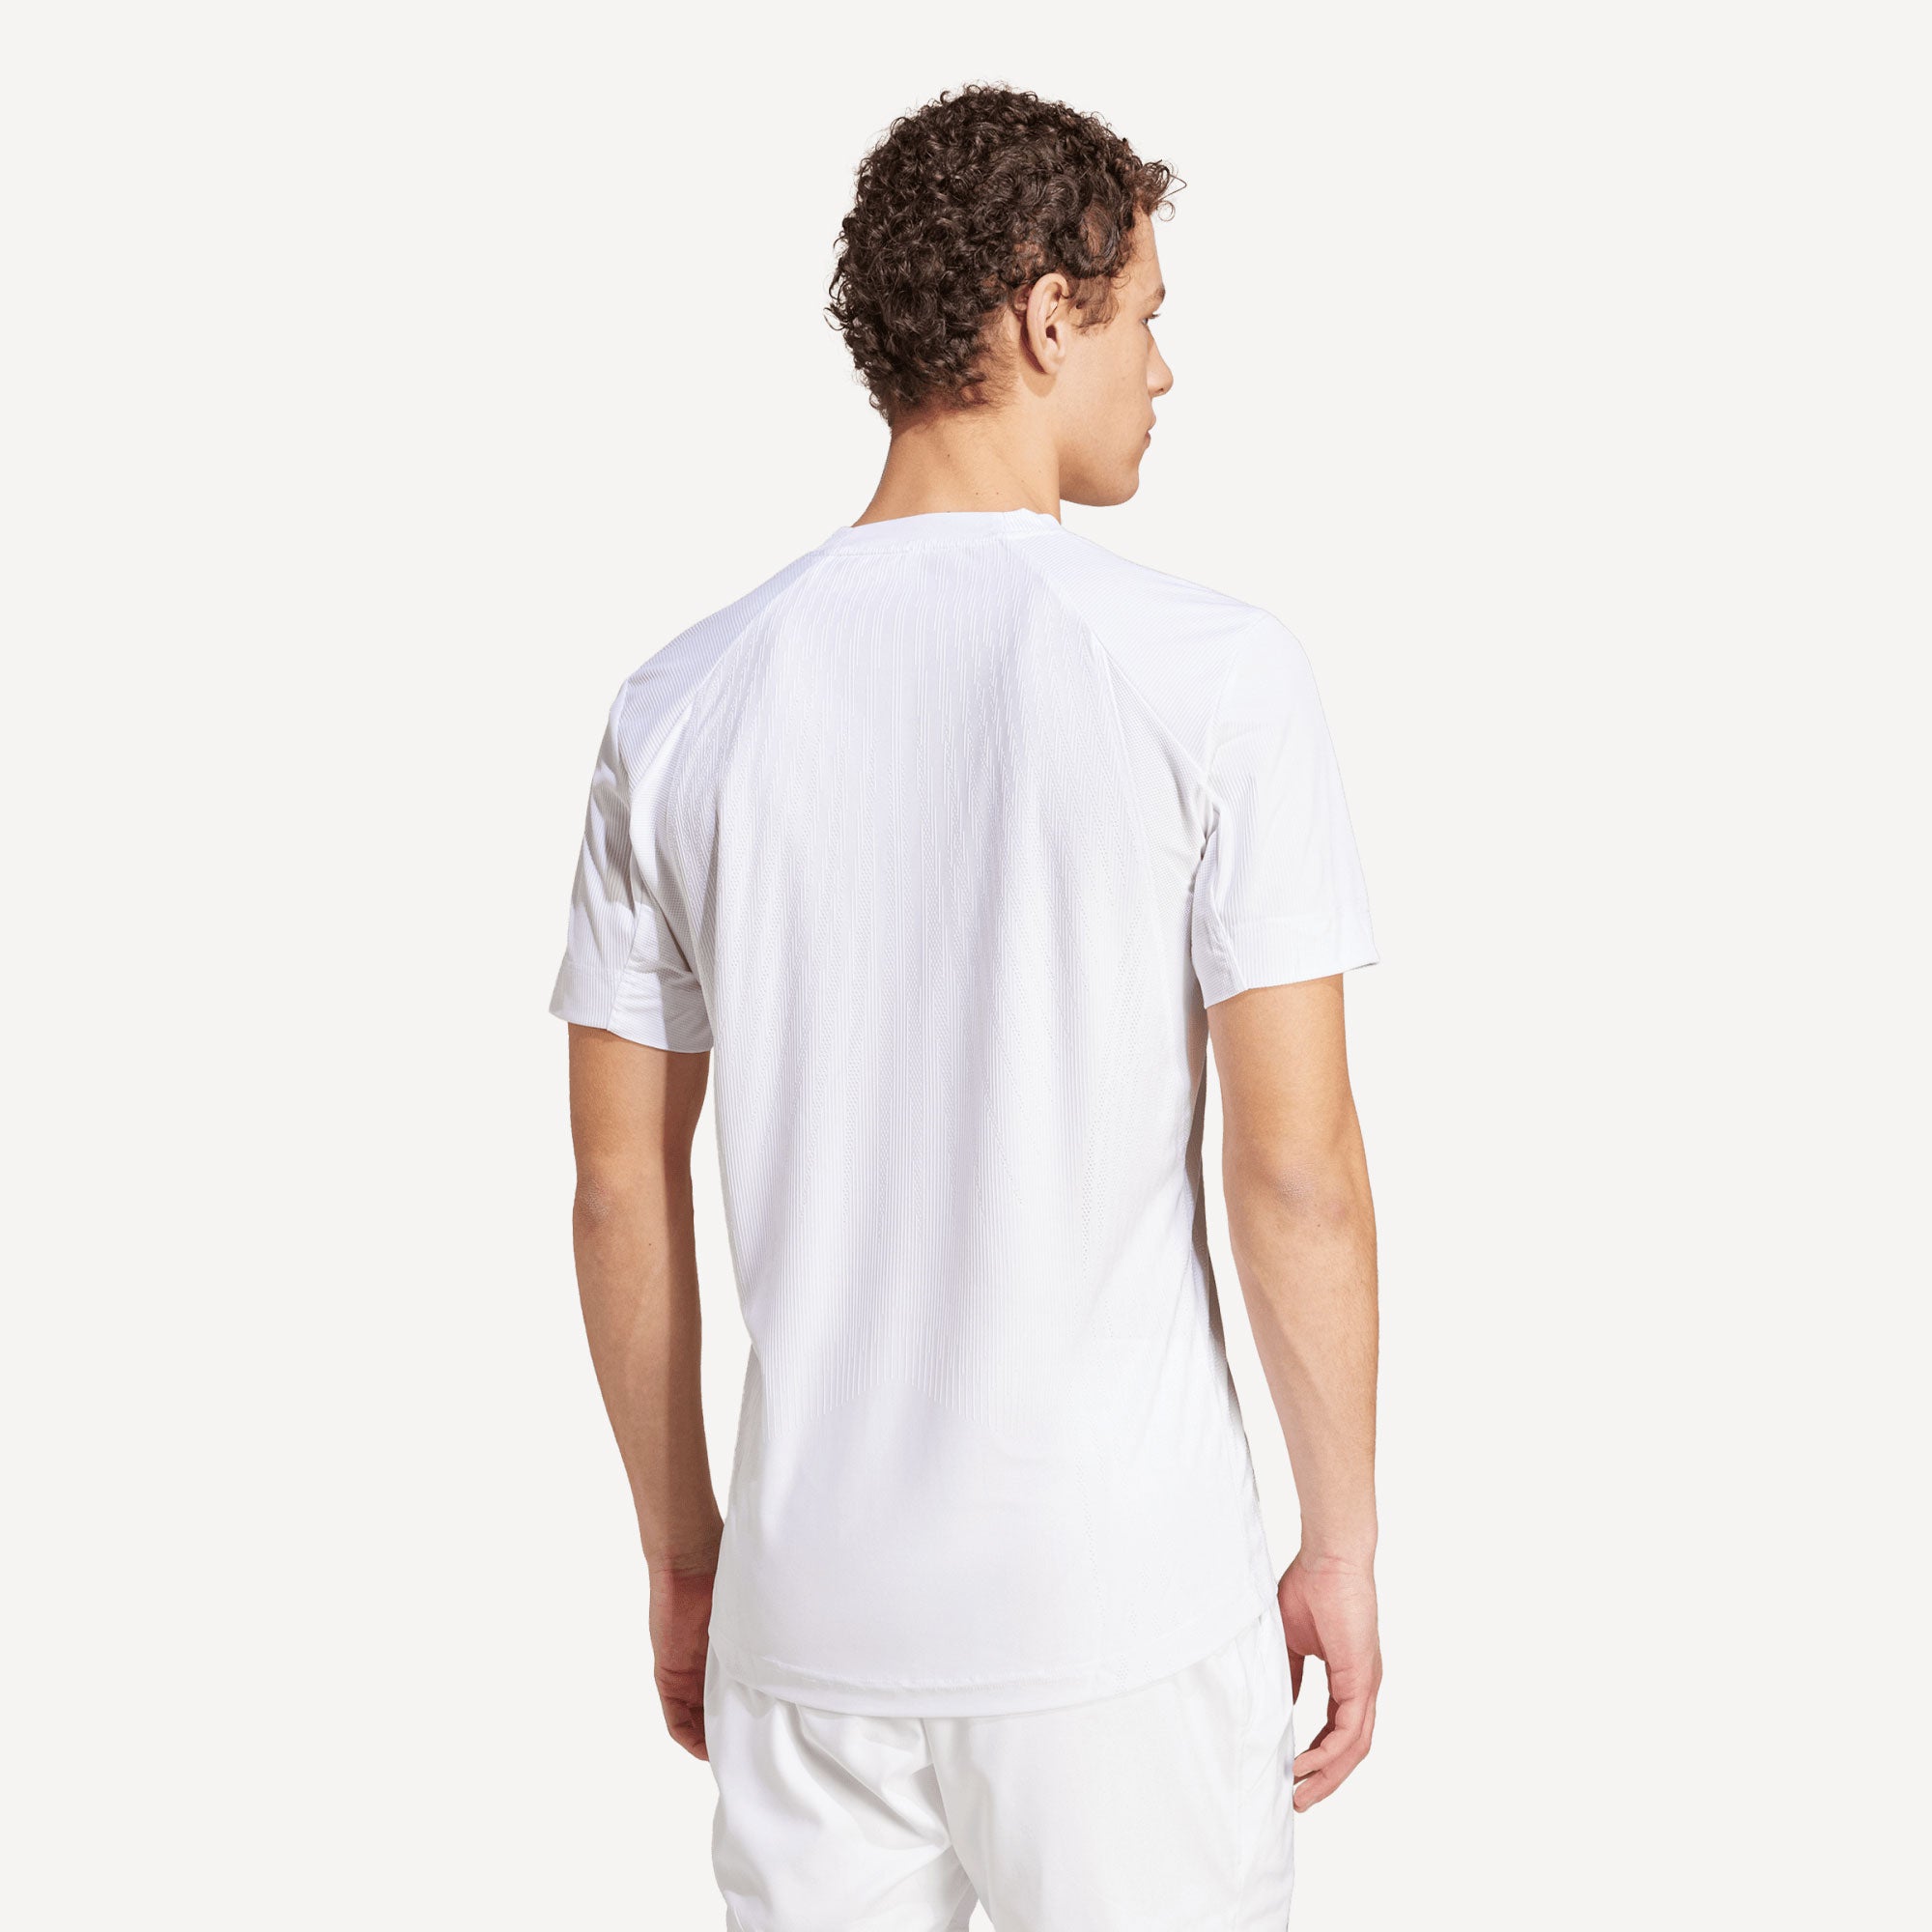 adidas Pro London Men's Airchill Tennis Shirt - White (2)